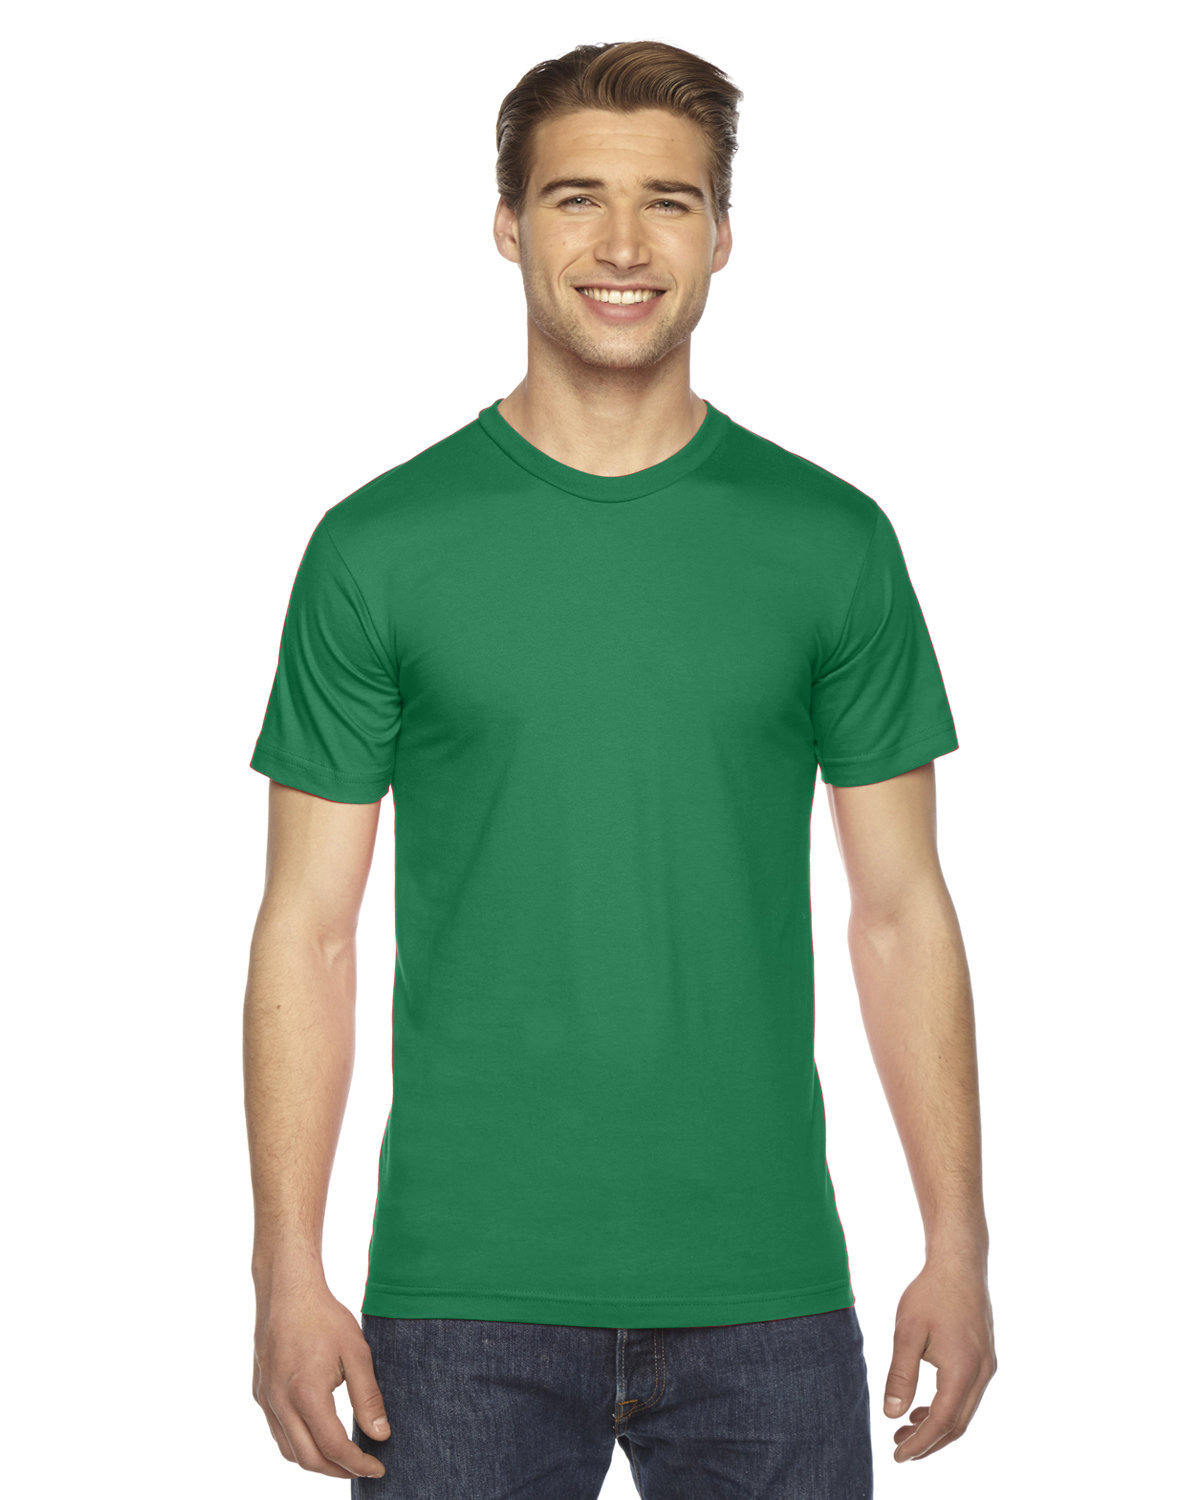 American Apparel Unisex Fine Jersey USA Made T-Shirt kelly green 